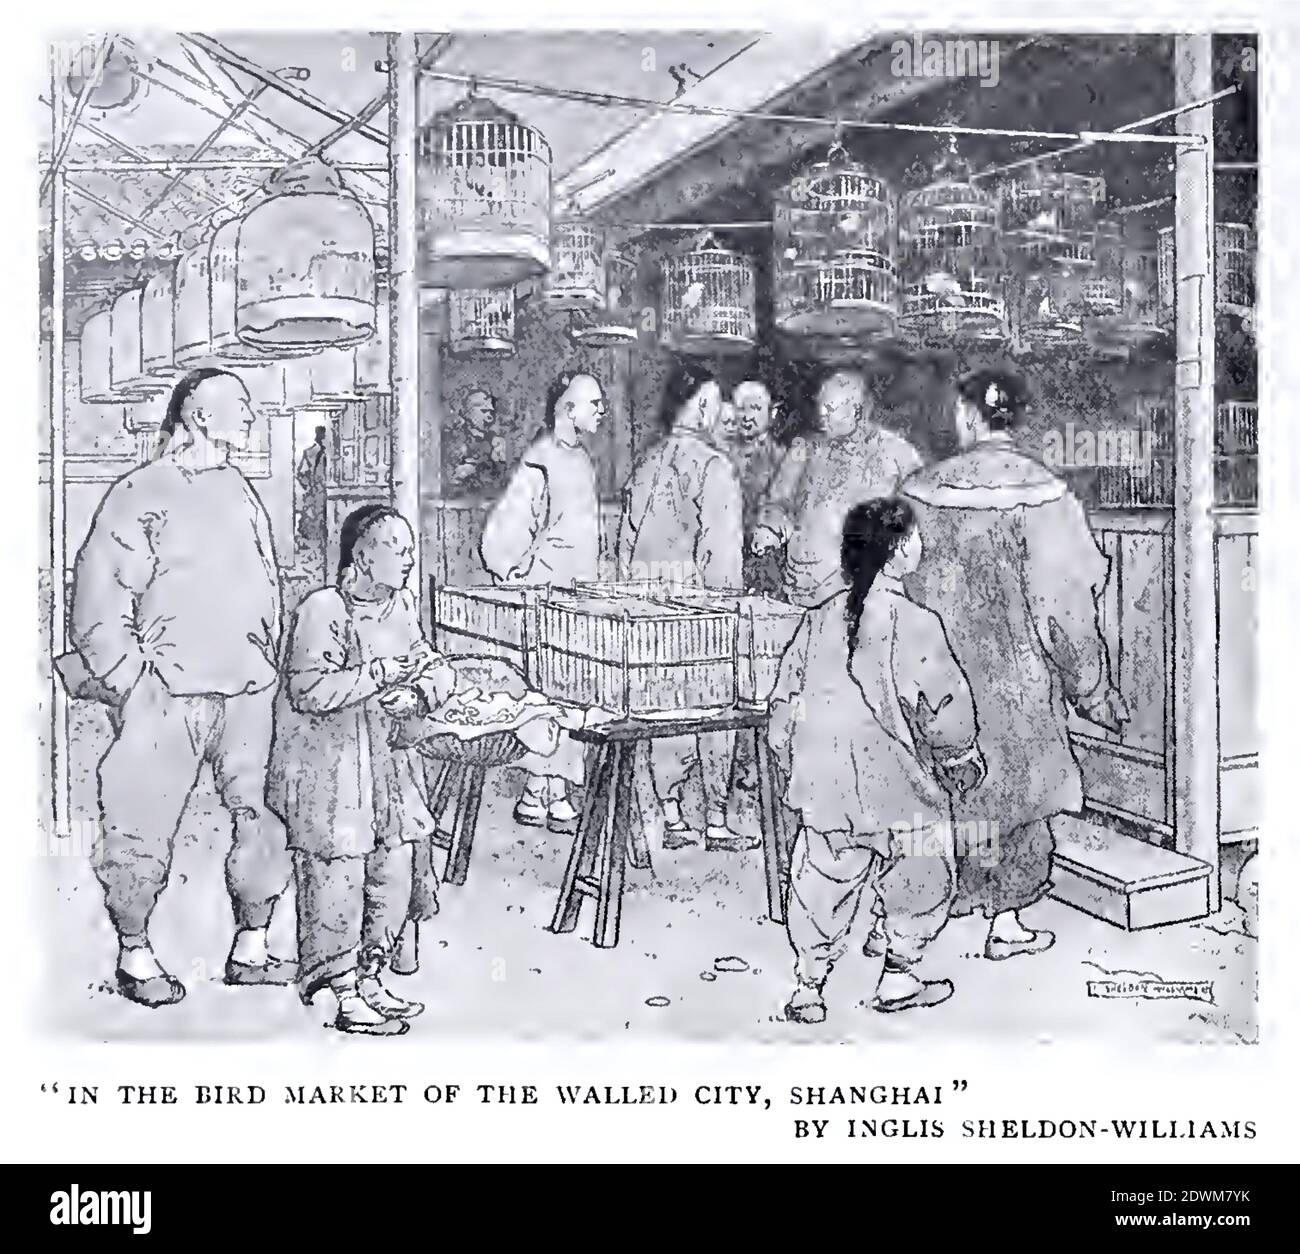 Vintage antike Illustration genannt in der Bird Market of the Walled City, Shanghai von anglo-canadiana Inglis Sheldon Williams. Stockfoto